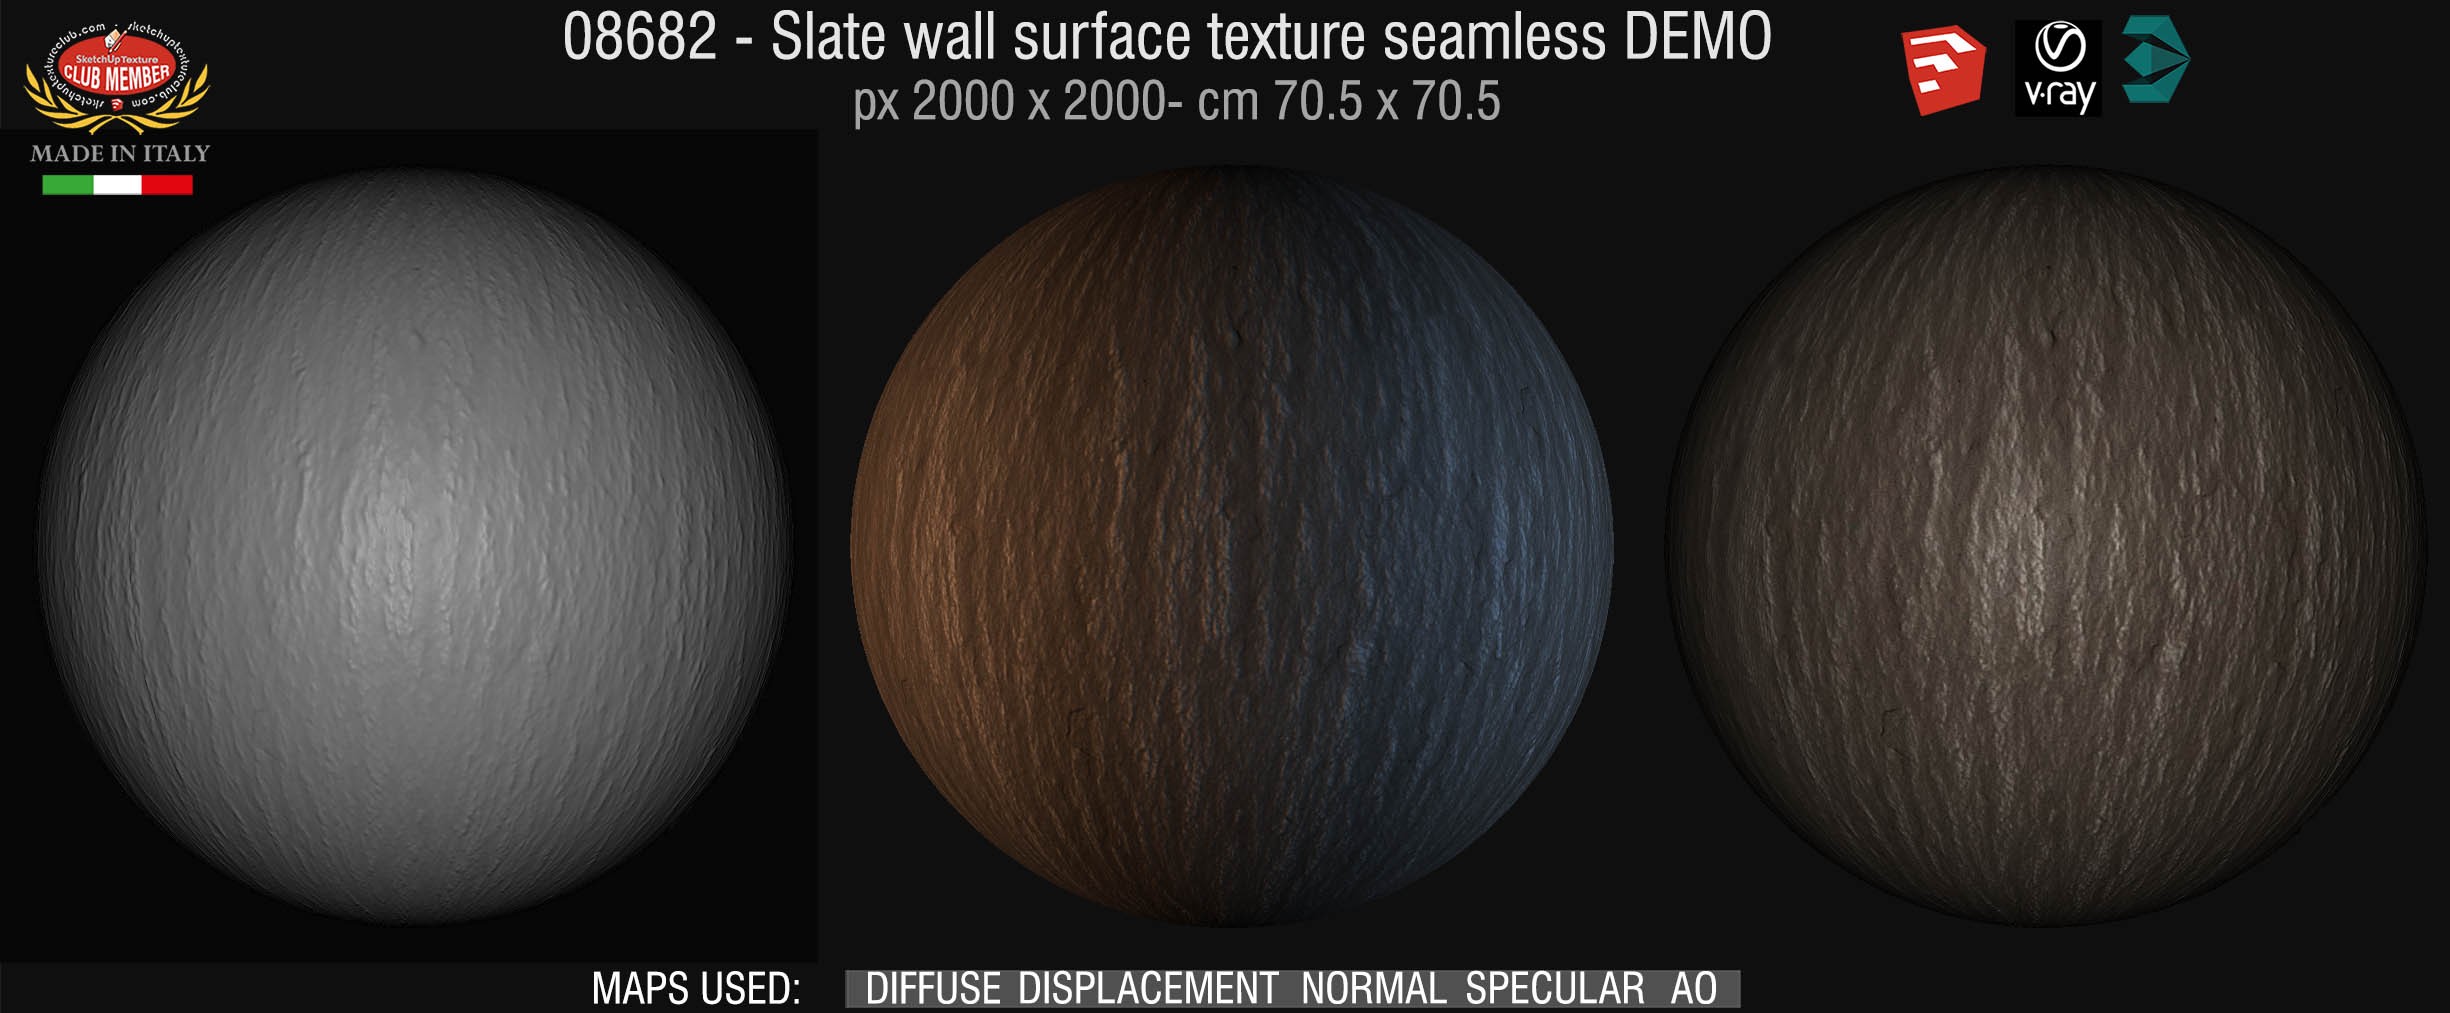 08682 Slate wall surface texture seamless + maps DEMO